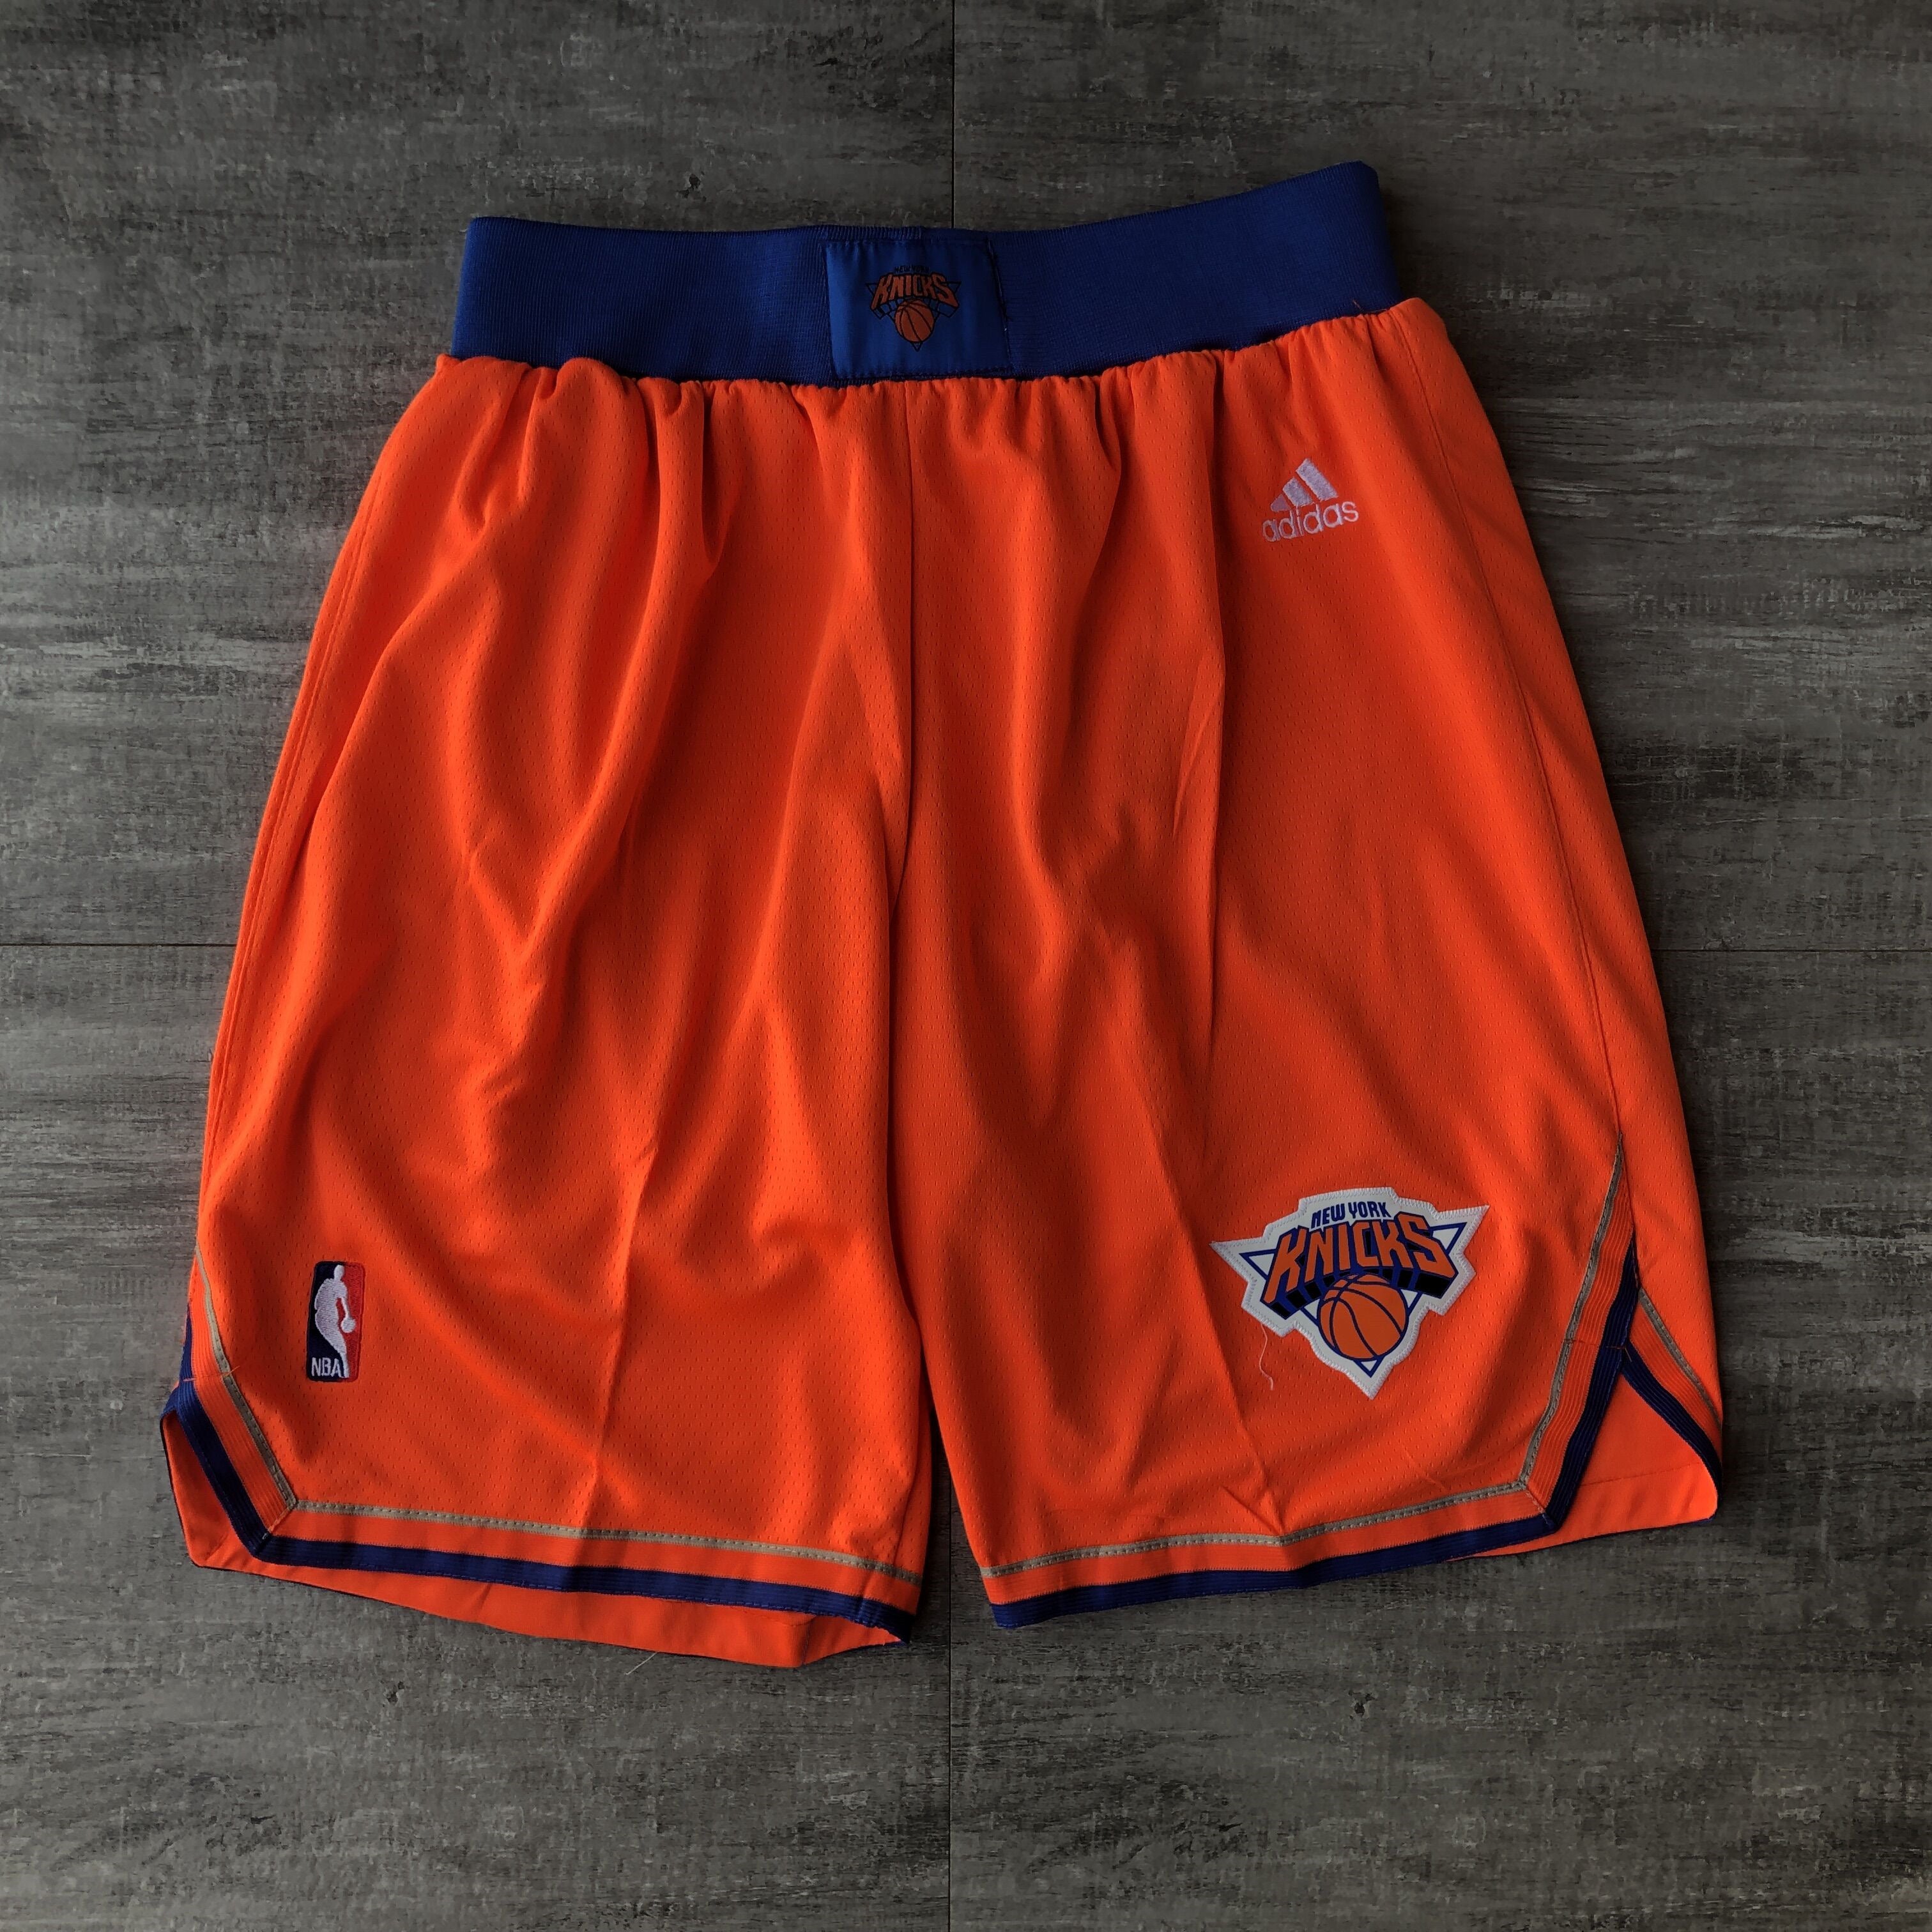 Knicks orange shorts